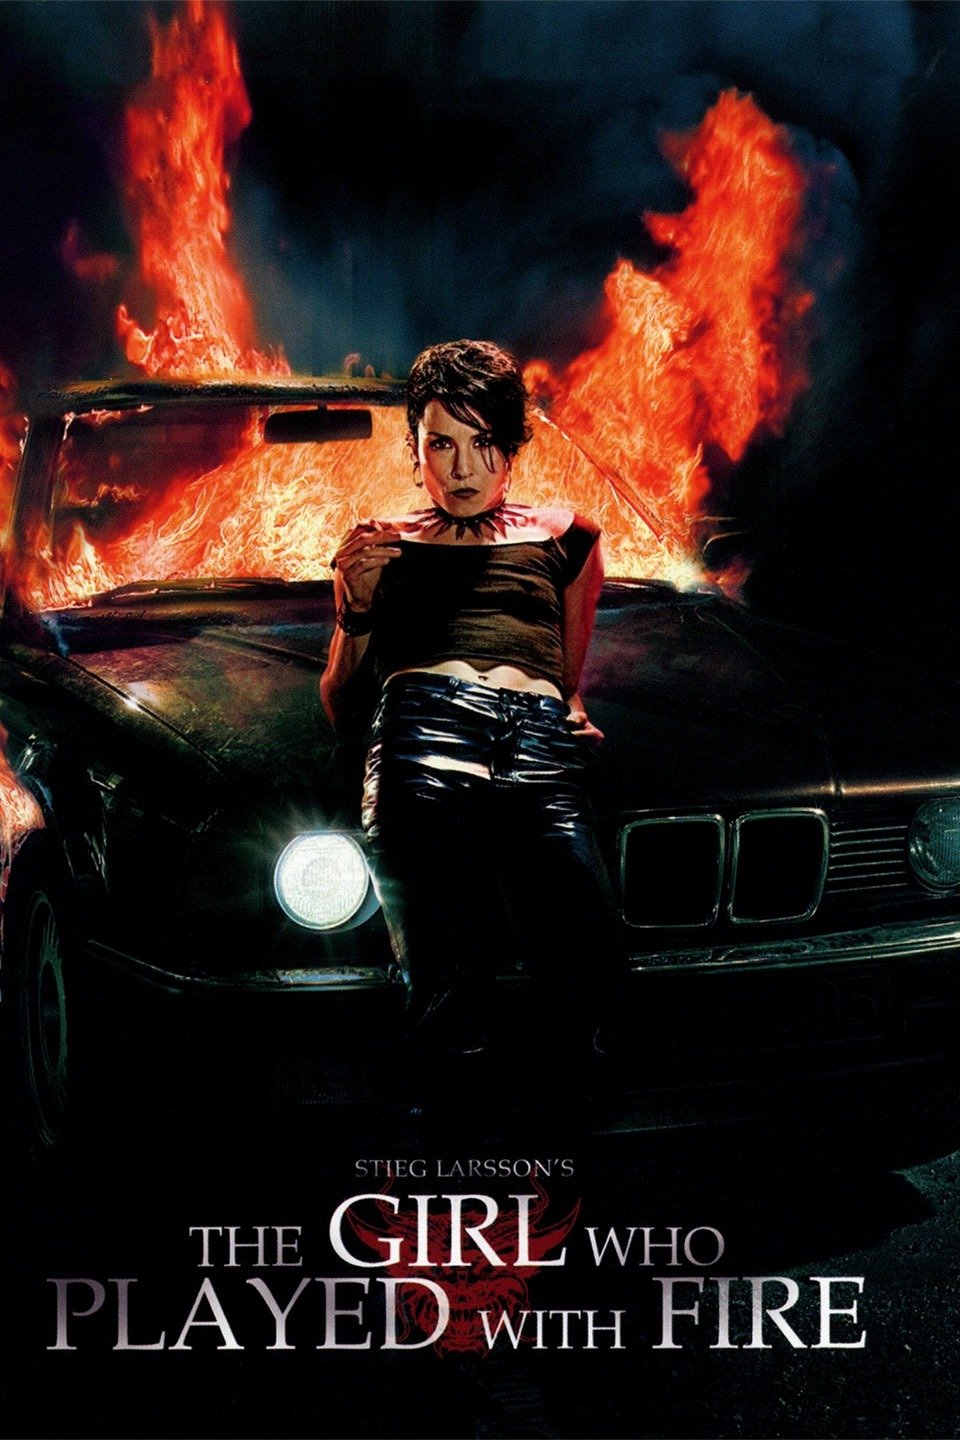 [MINI Super-HQ] The Girl Who Played With Fire (2009) ขบถสาวโค่นทรชน โหมไฟสังหาร ภาค 2 [1080p] [พากย์ไทย DTS + เสียงสวีเดน 5.1] [บรรยายไทย + อังกฤษ] [เสียงไทย + ซับไทย] [ONE2UP]